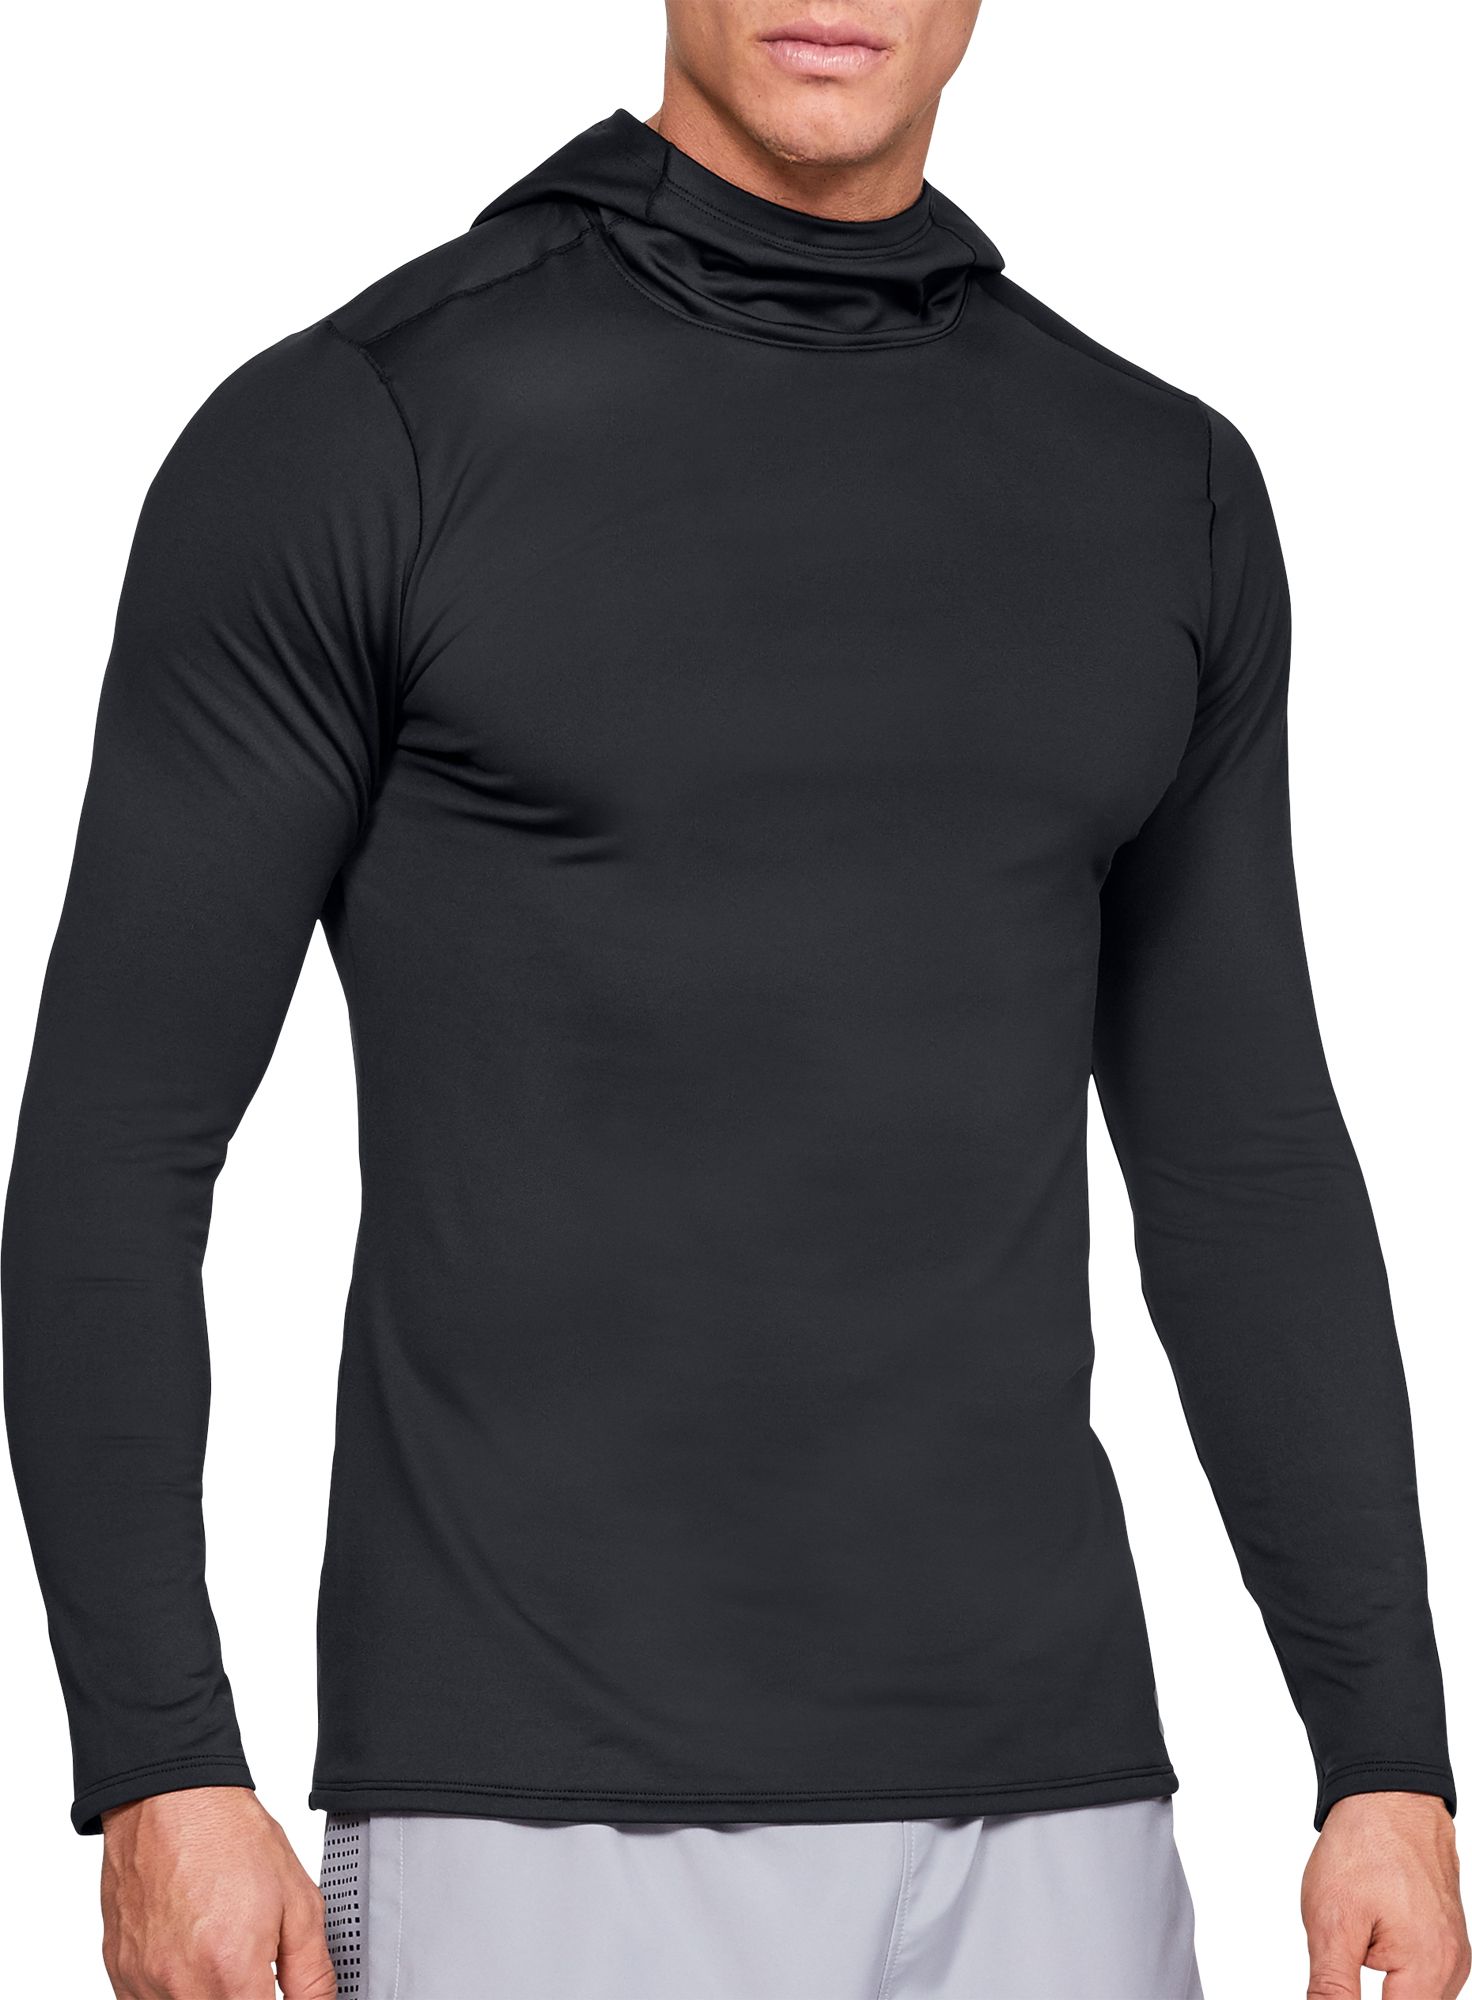 black under armour long sleeve shirt